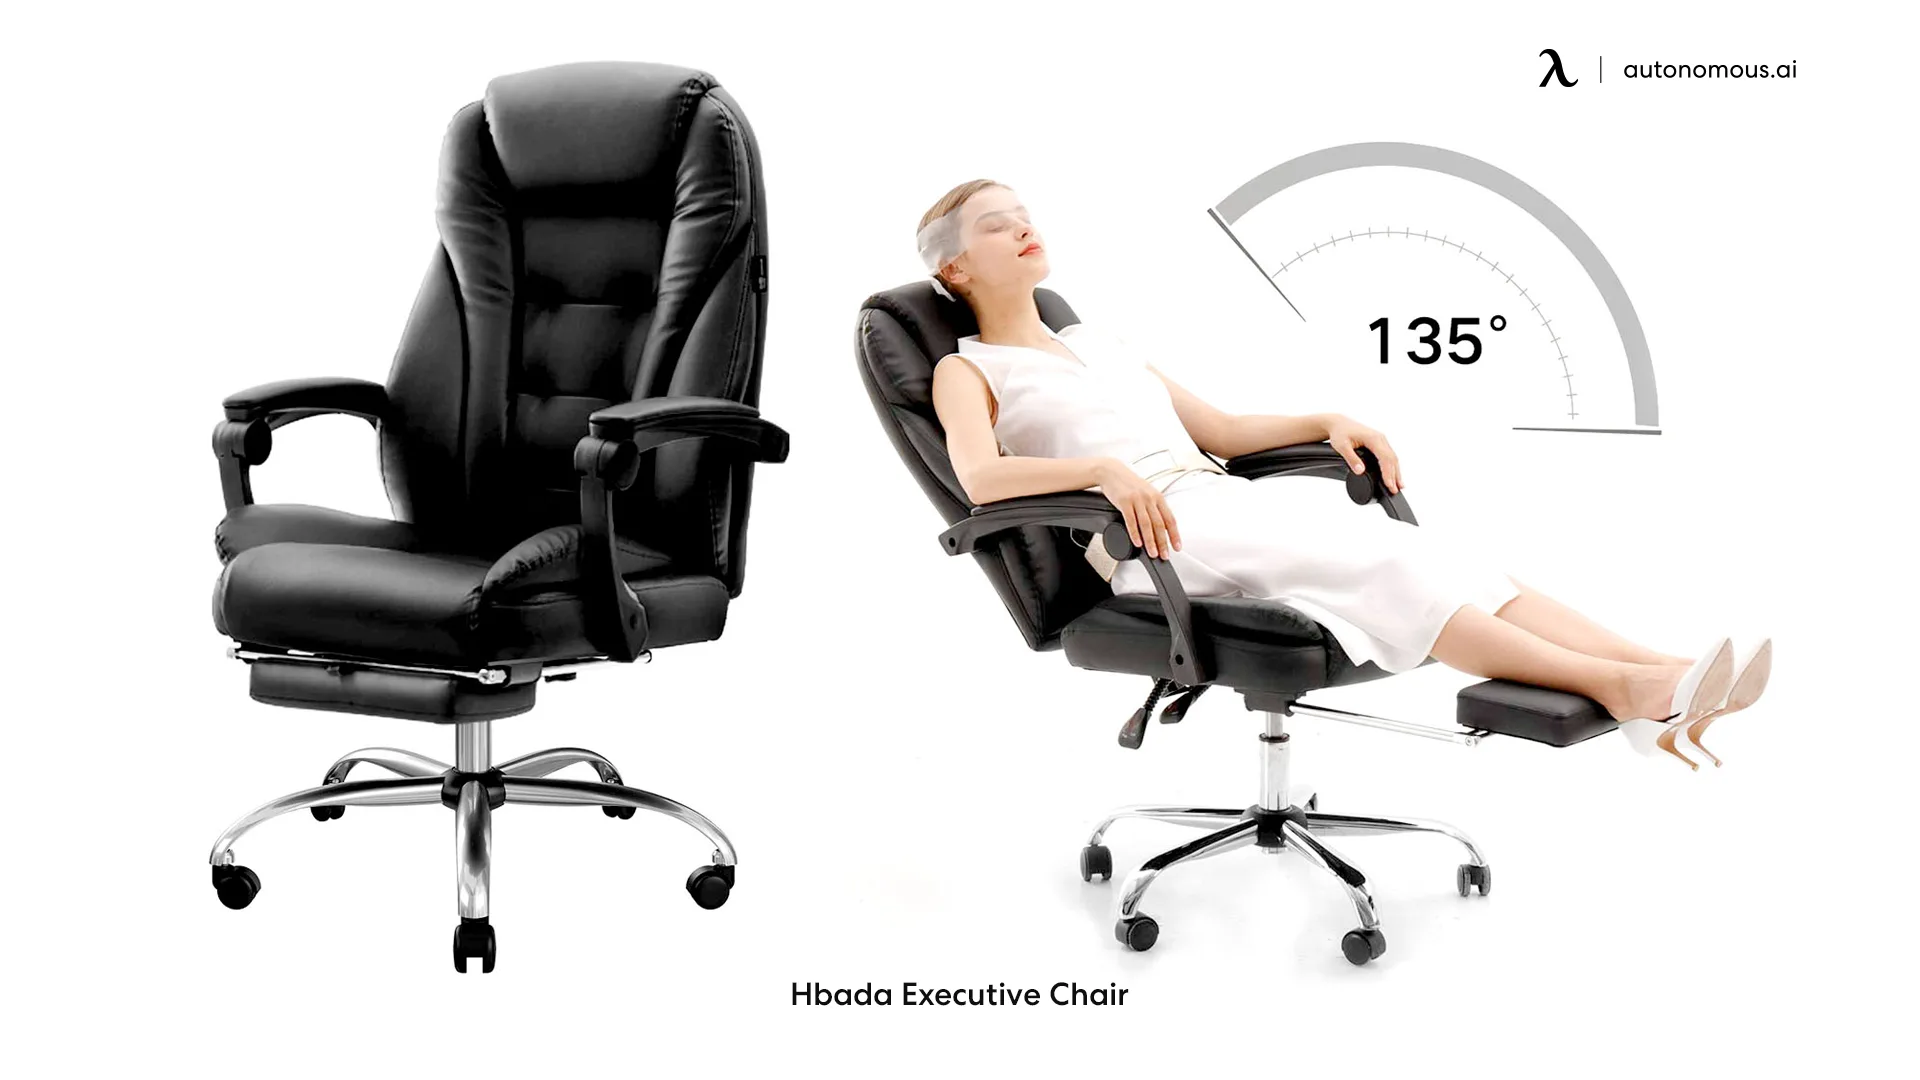 Hbada Executive Chair